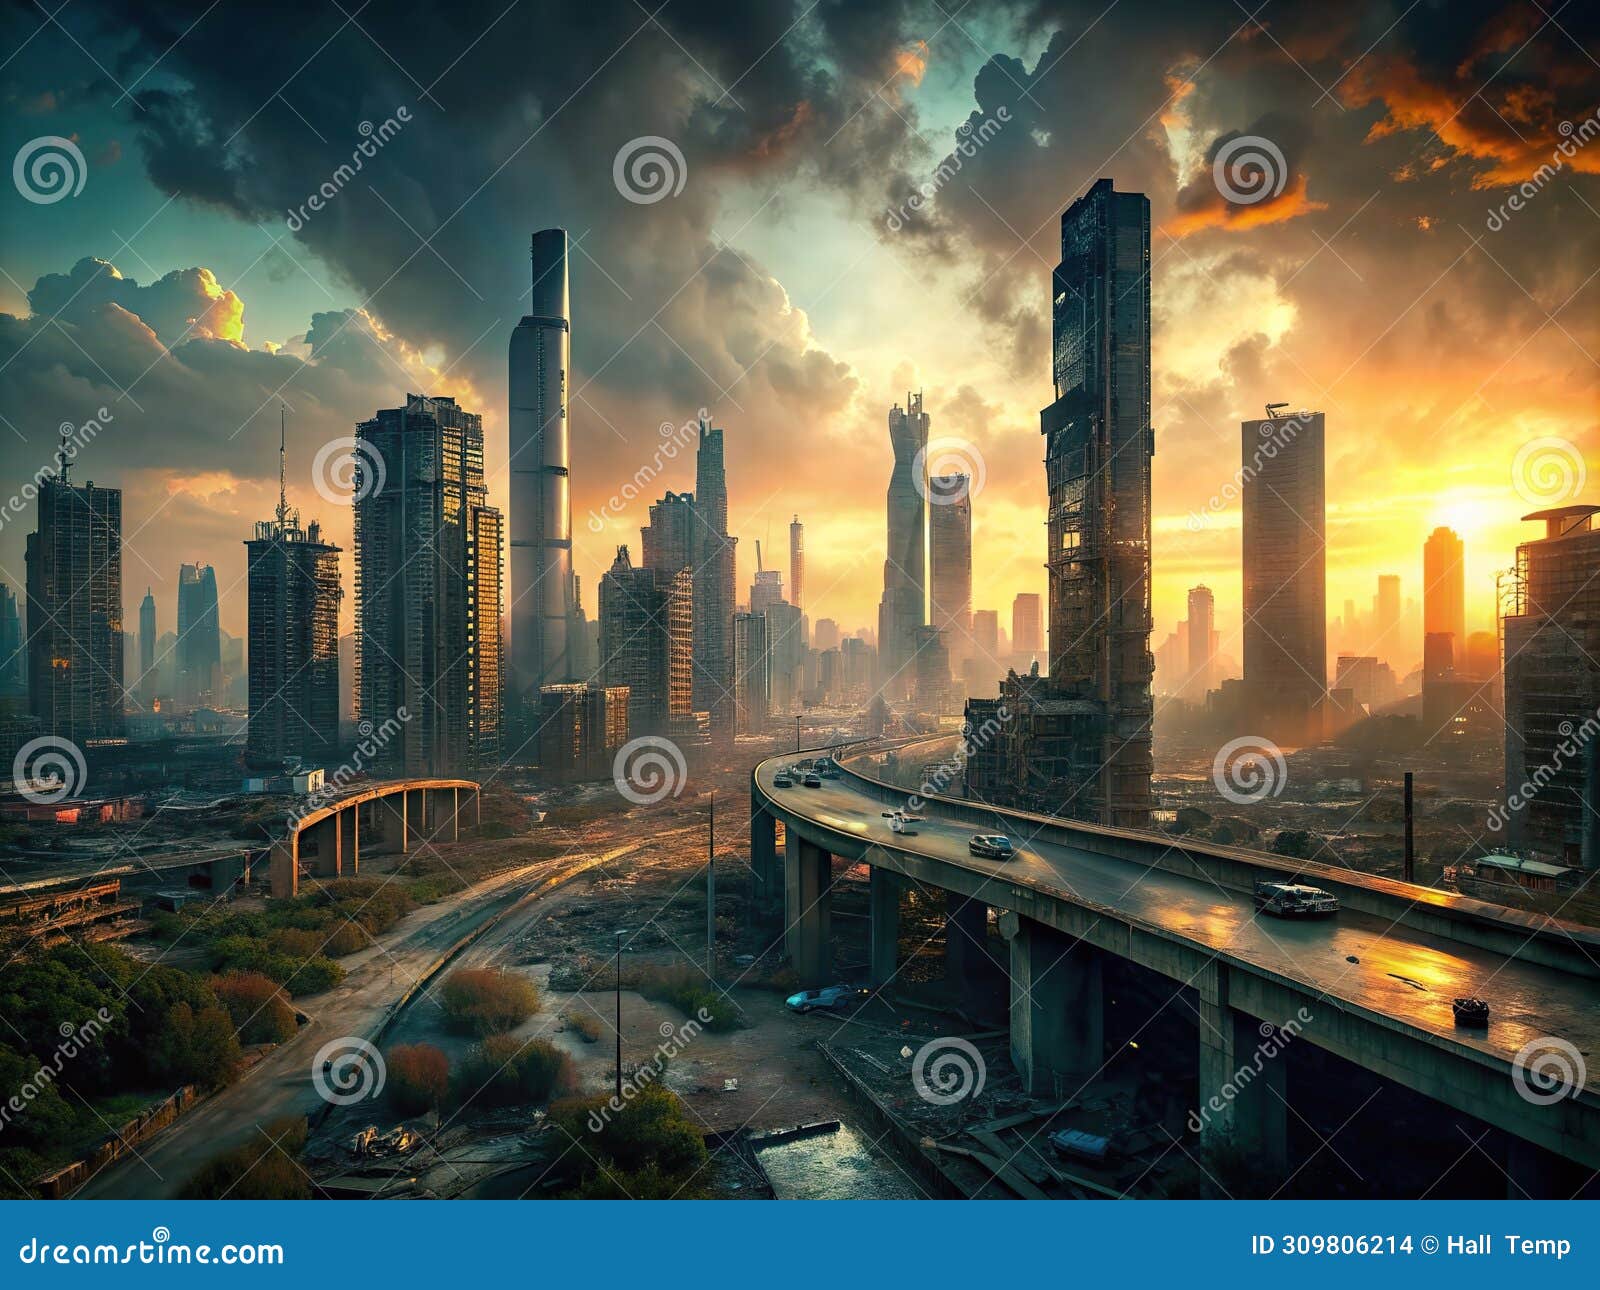 a decaying cyberpunk megacity skyline at dusk